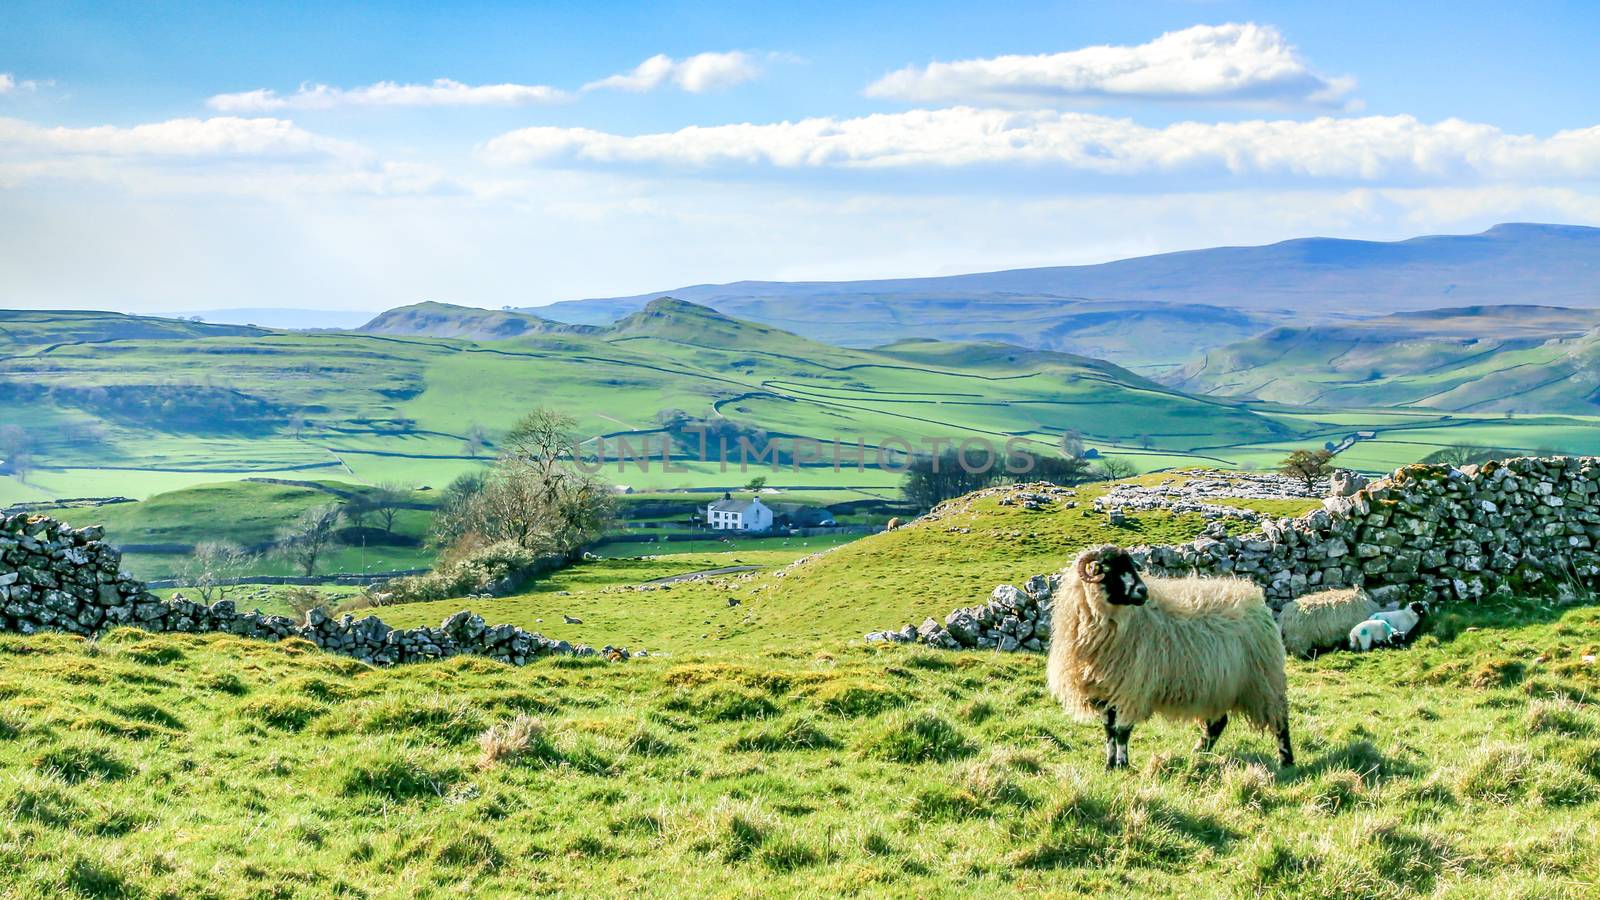 Beautiful yorkshire dales landscape stunning scenery england tourism uk green rolling hills sheep